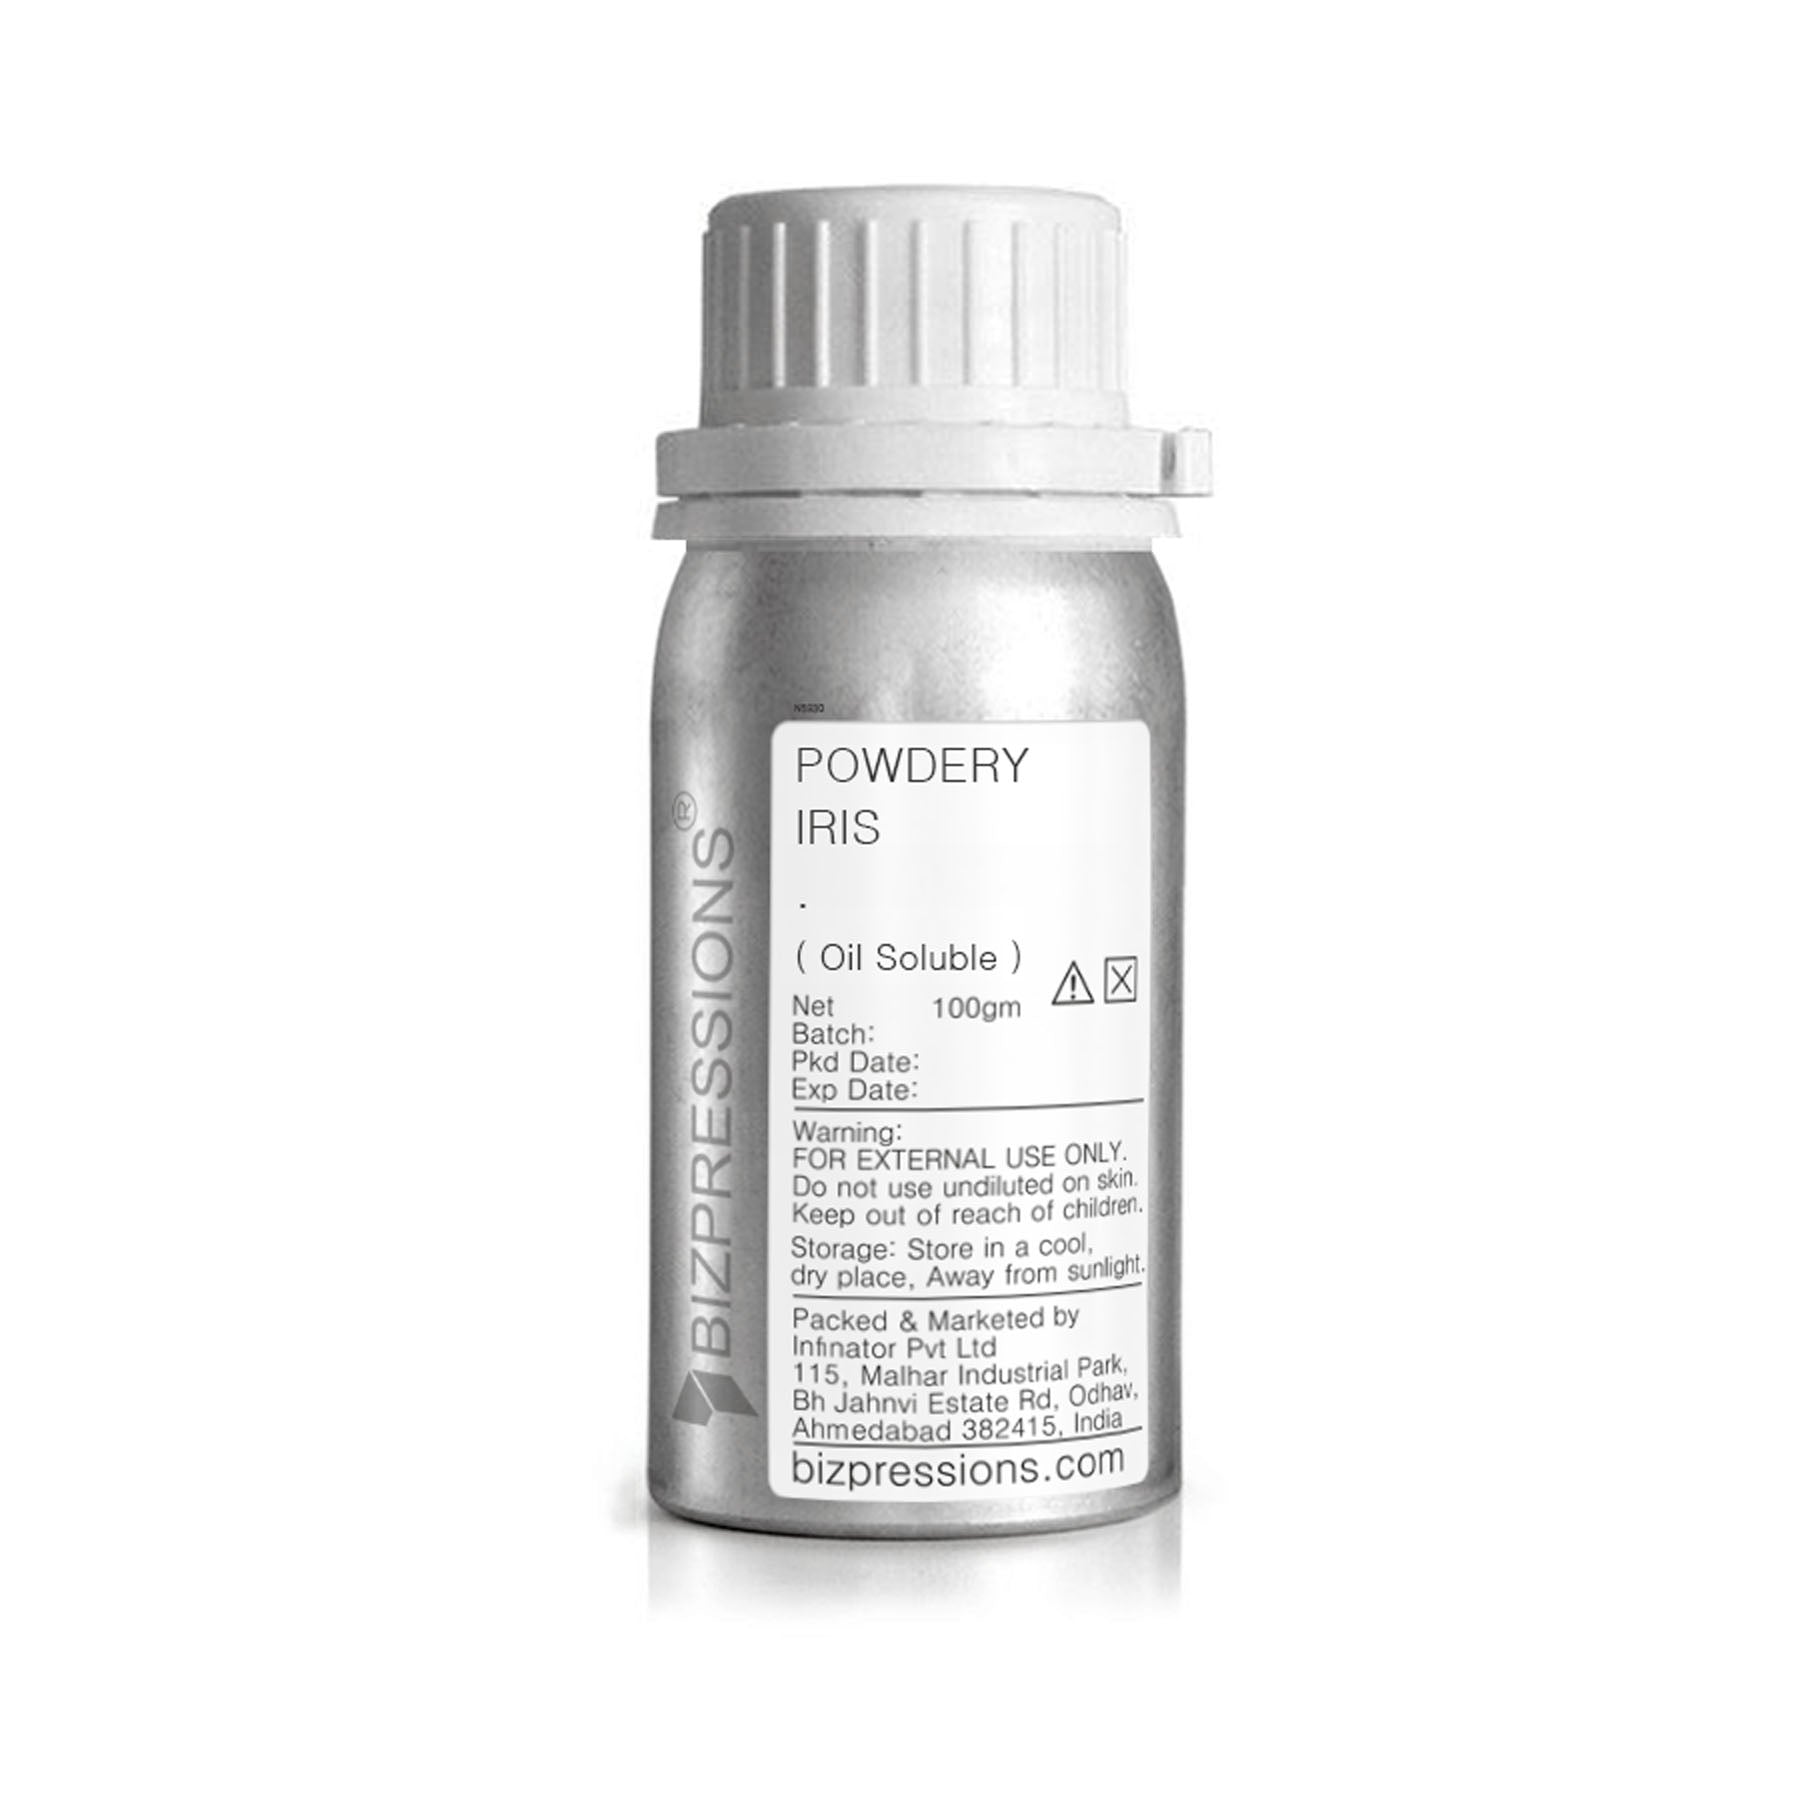 POWDERY IRIS - Fragrance ( Oil Soluble ) - 100 gm